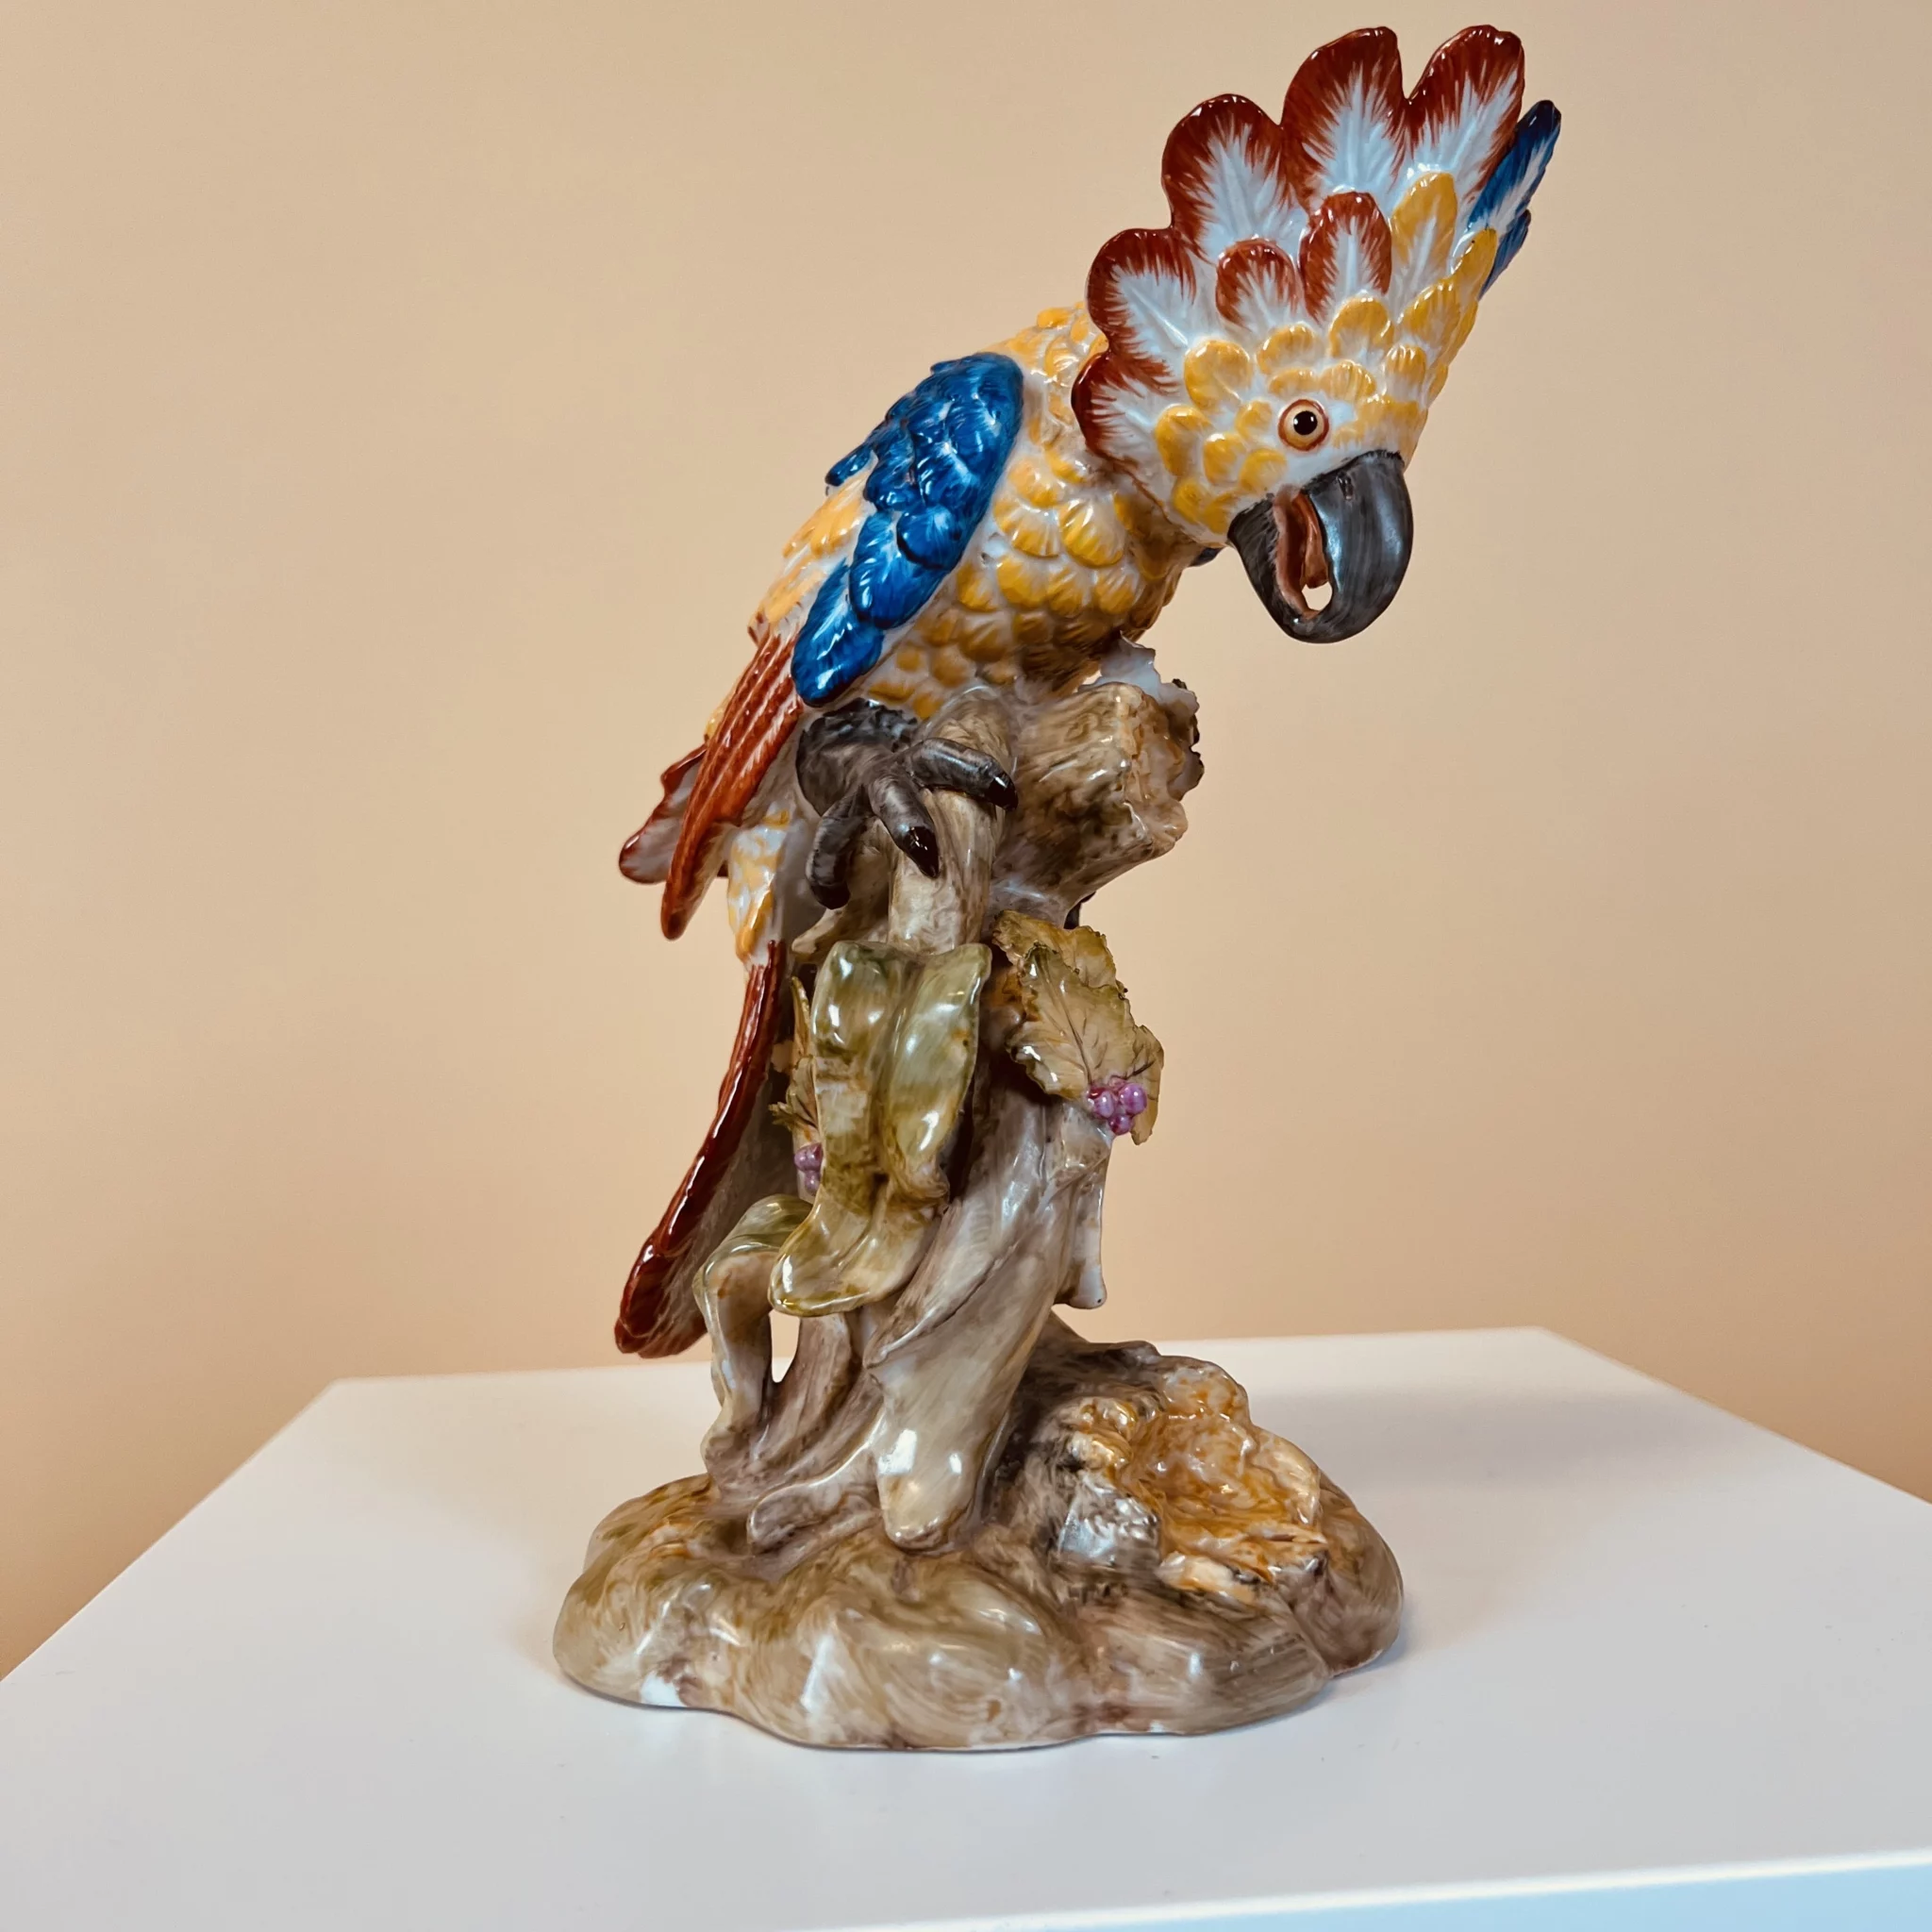 Mid-Century Modern Ceramic Figurine of a Parrot09